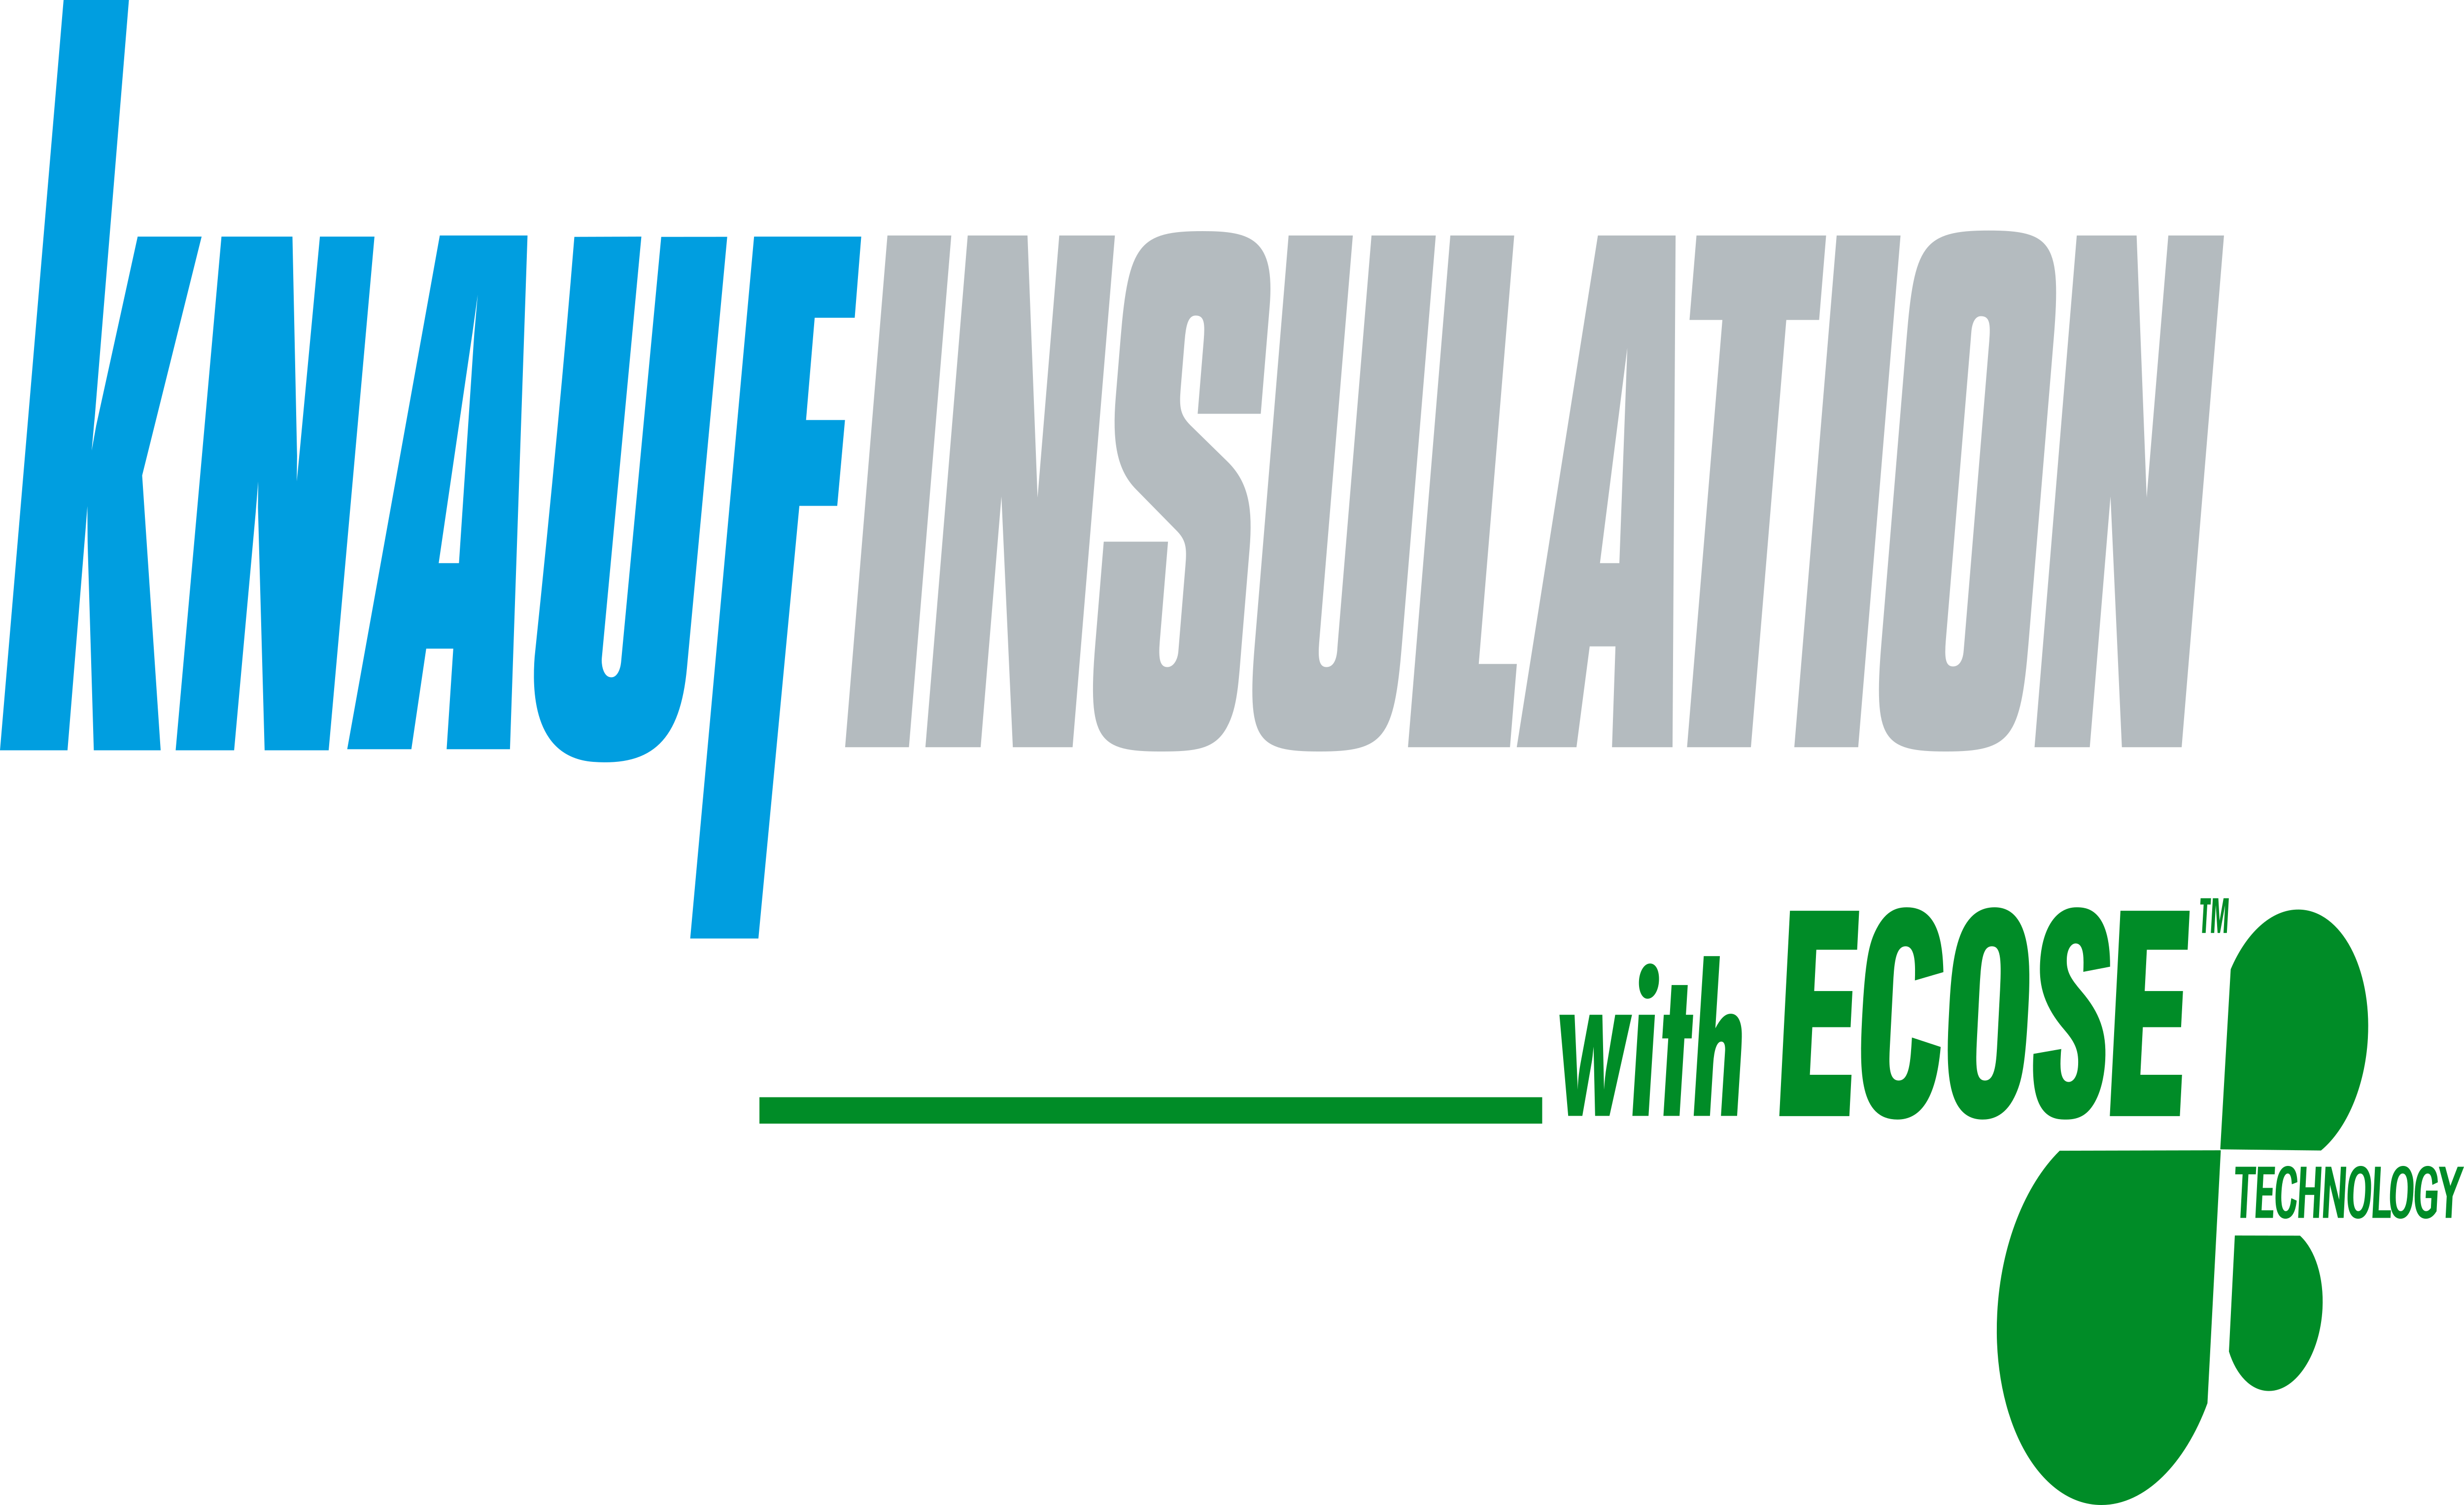 Knauf Logo - Knauf Insulation With Ecose Technology